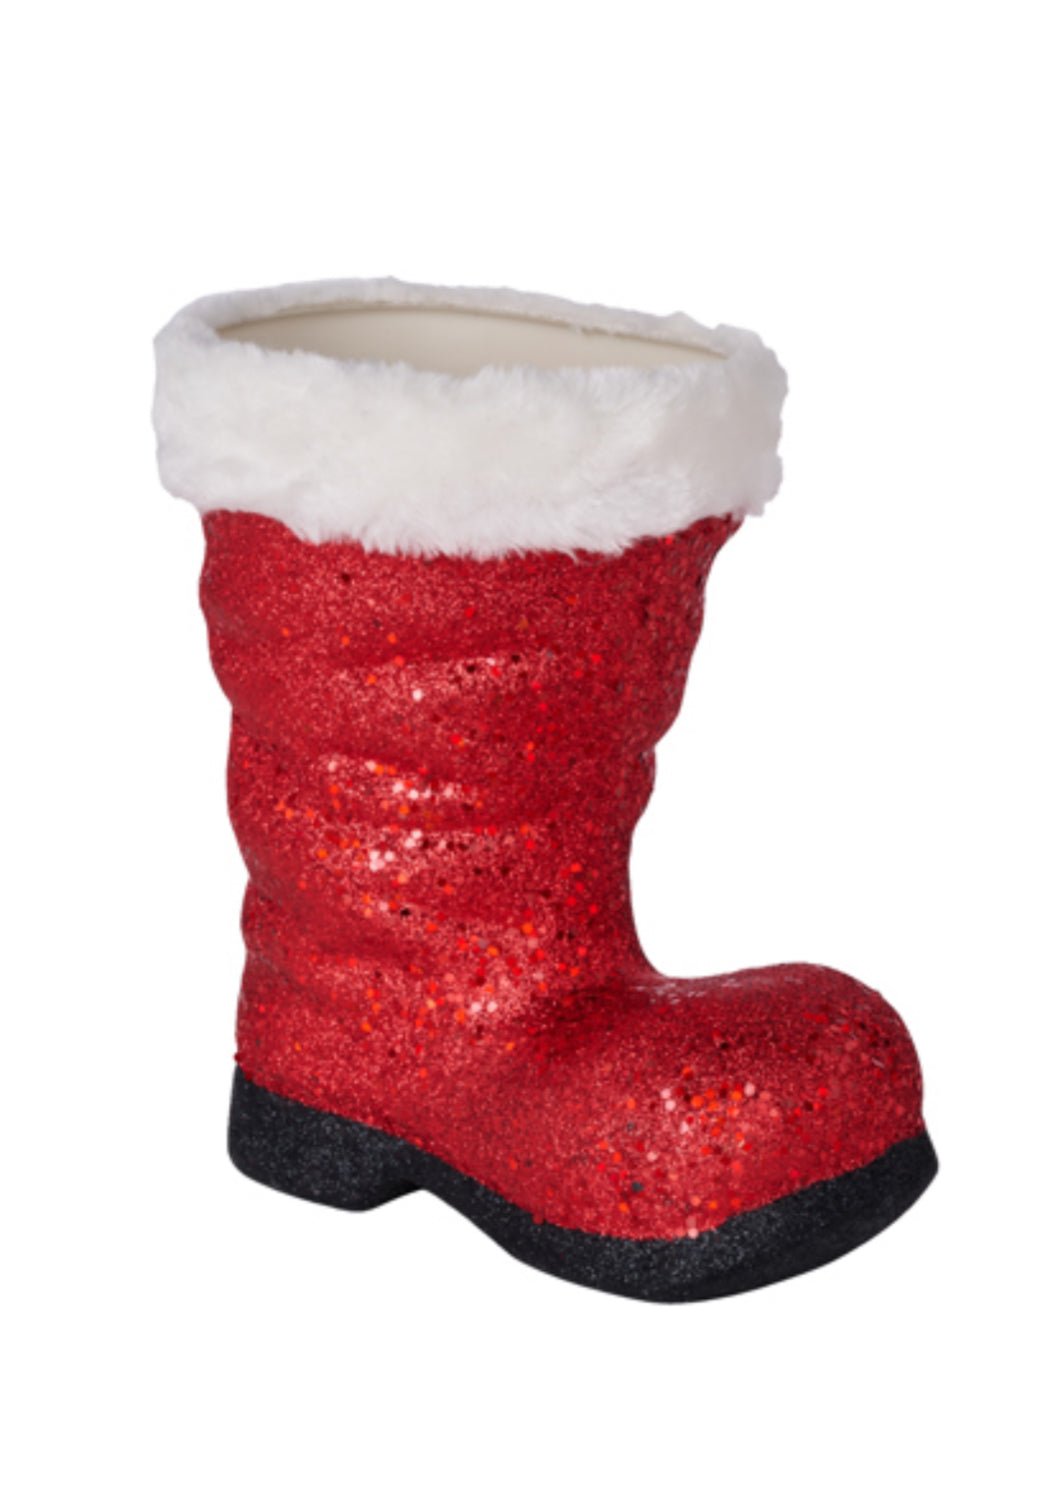 Santa boot vase - red - Greenery MarketXC723424